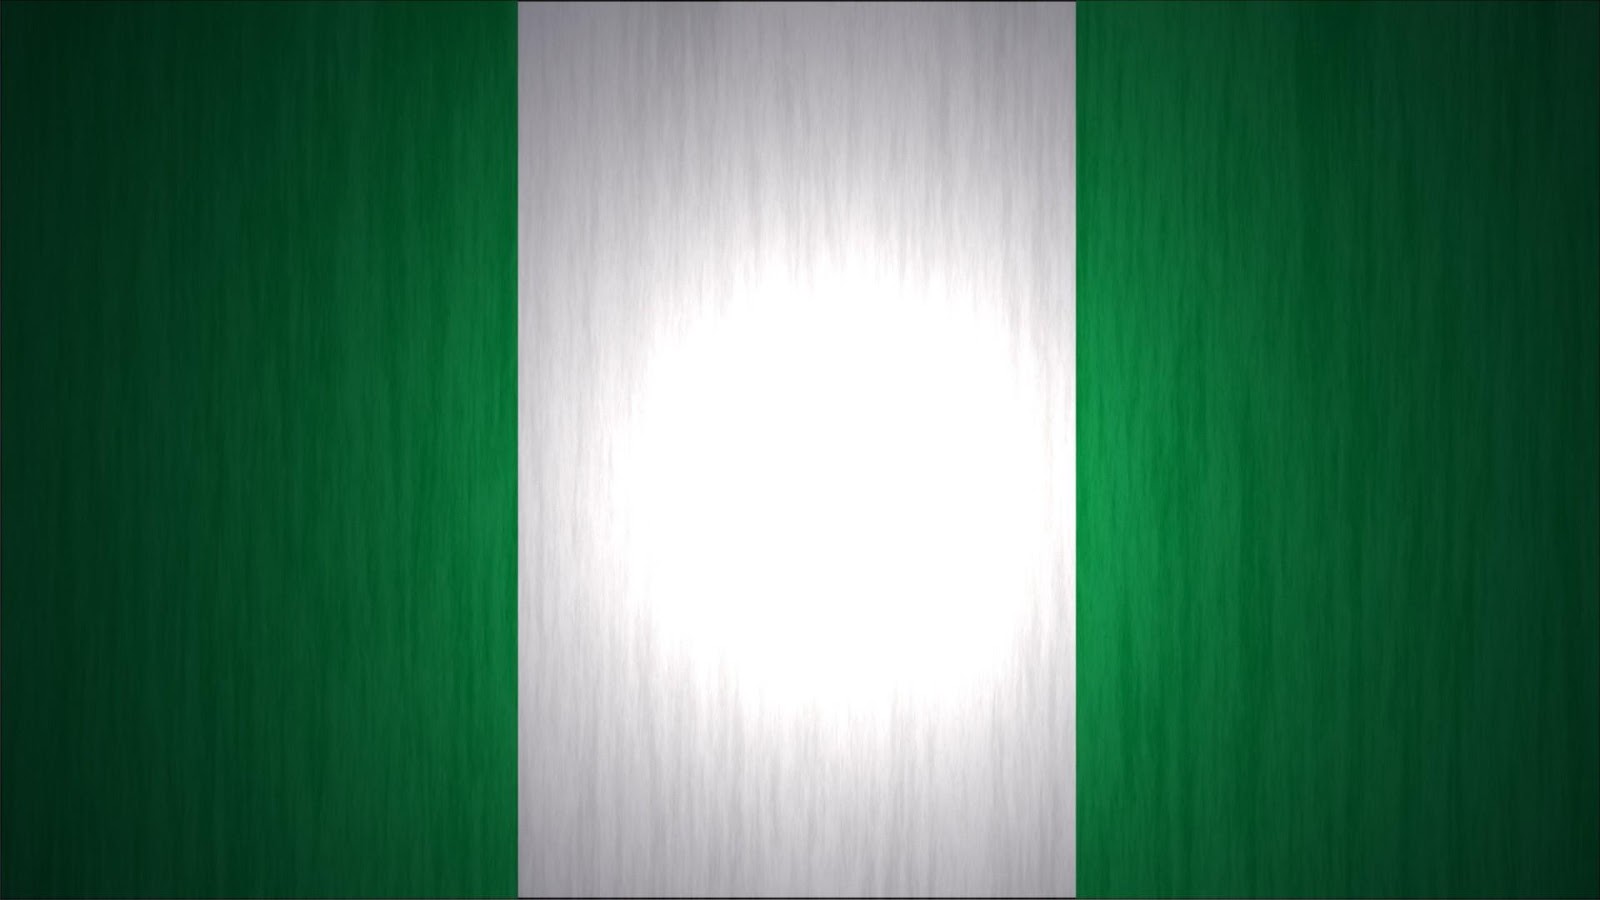 Potential Constitutional Change In Nigeria Underway